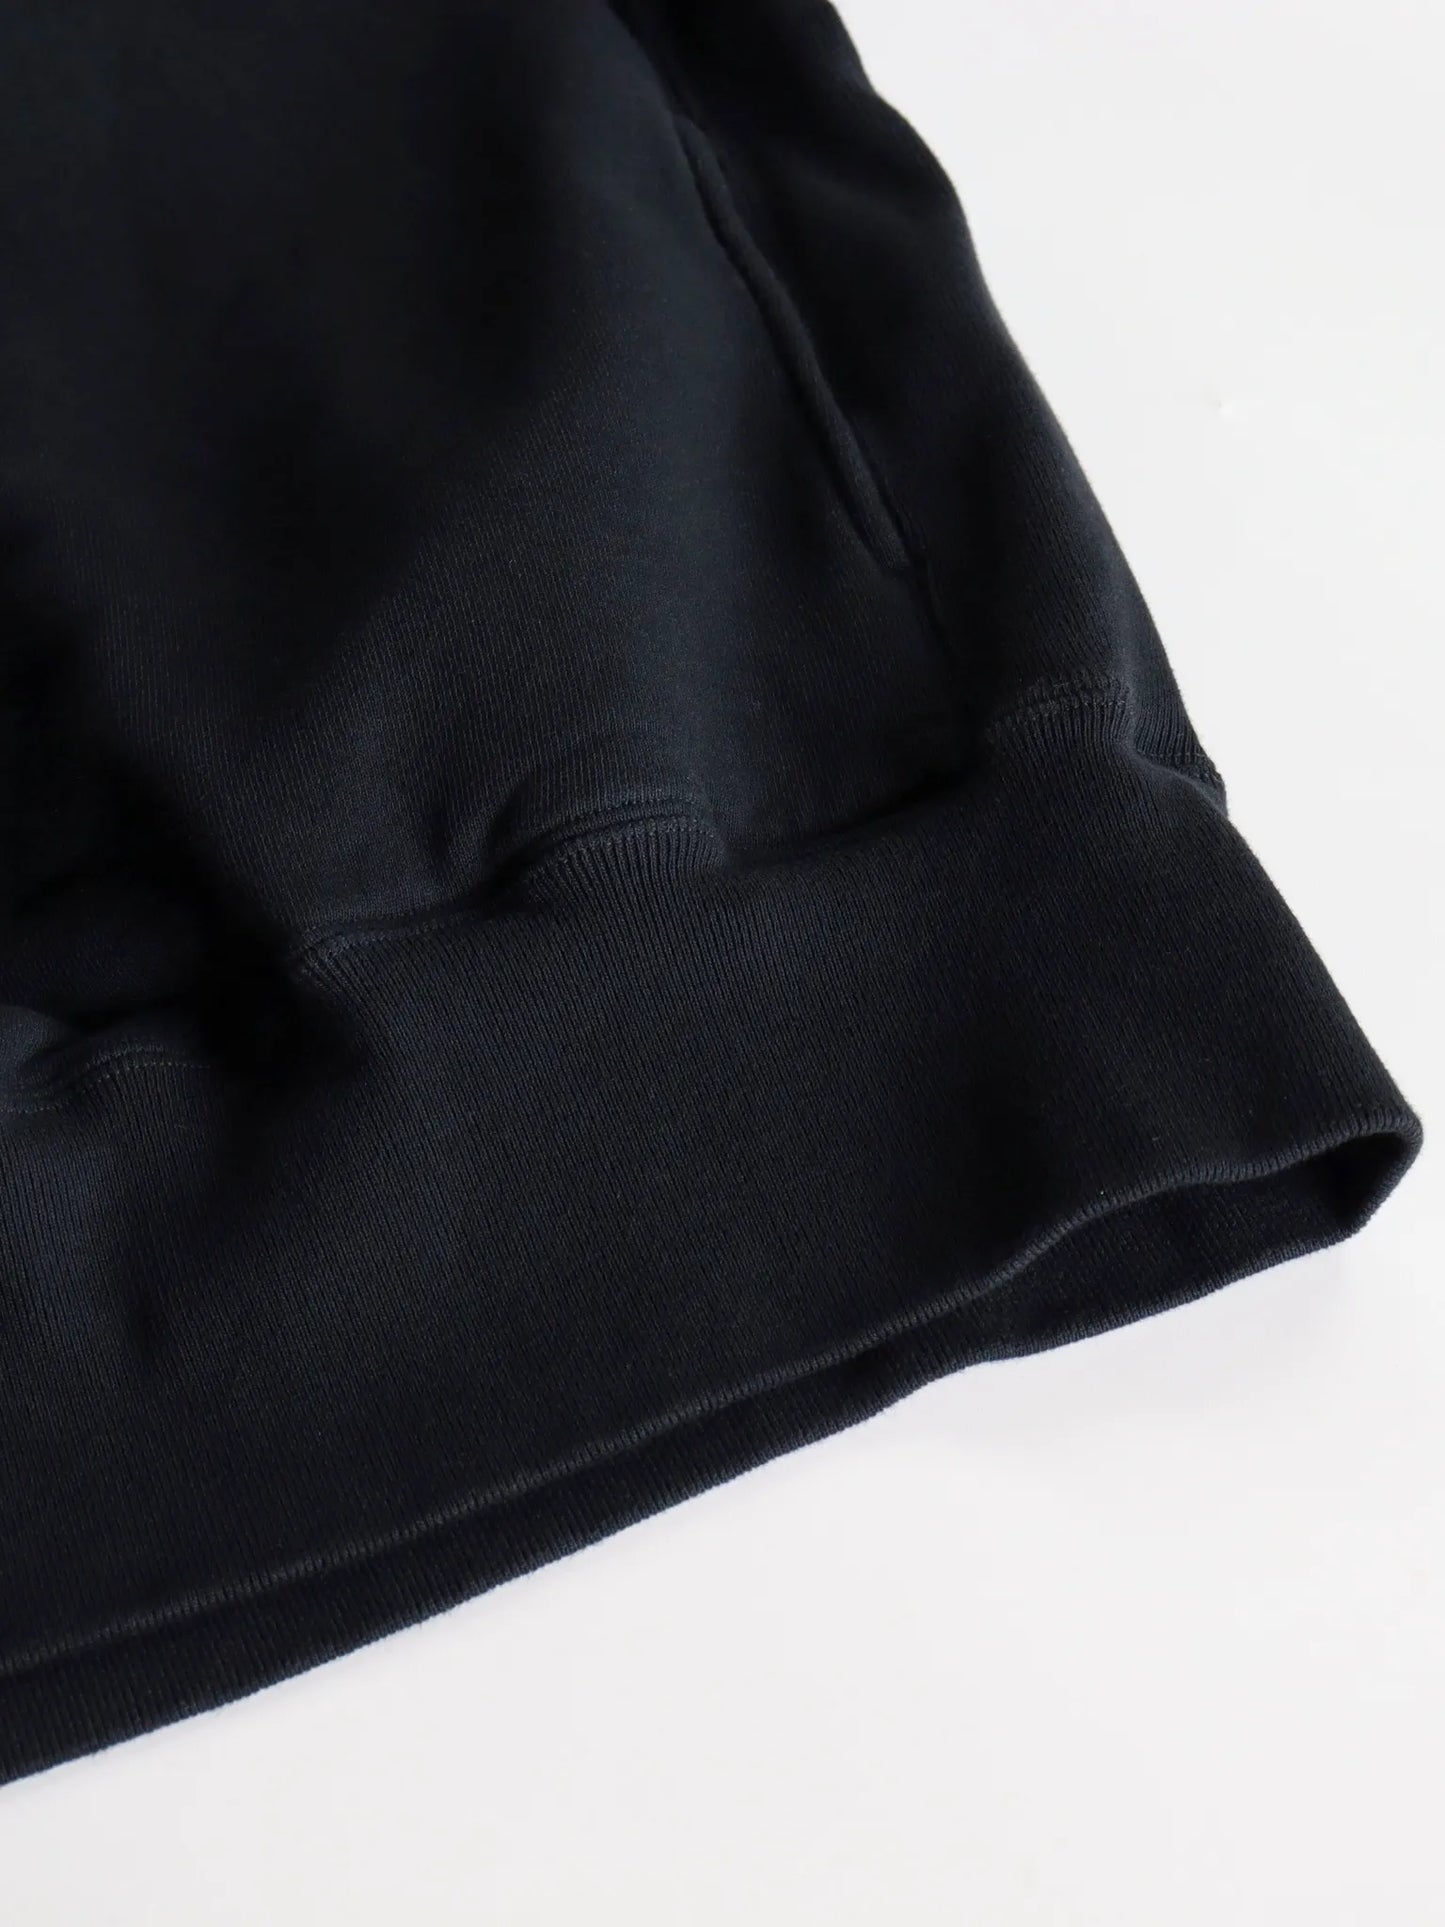 medium-sportswear-warmup-top-dusty-black-6